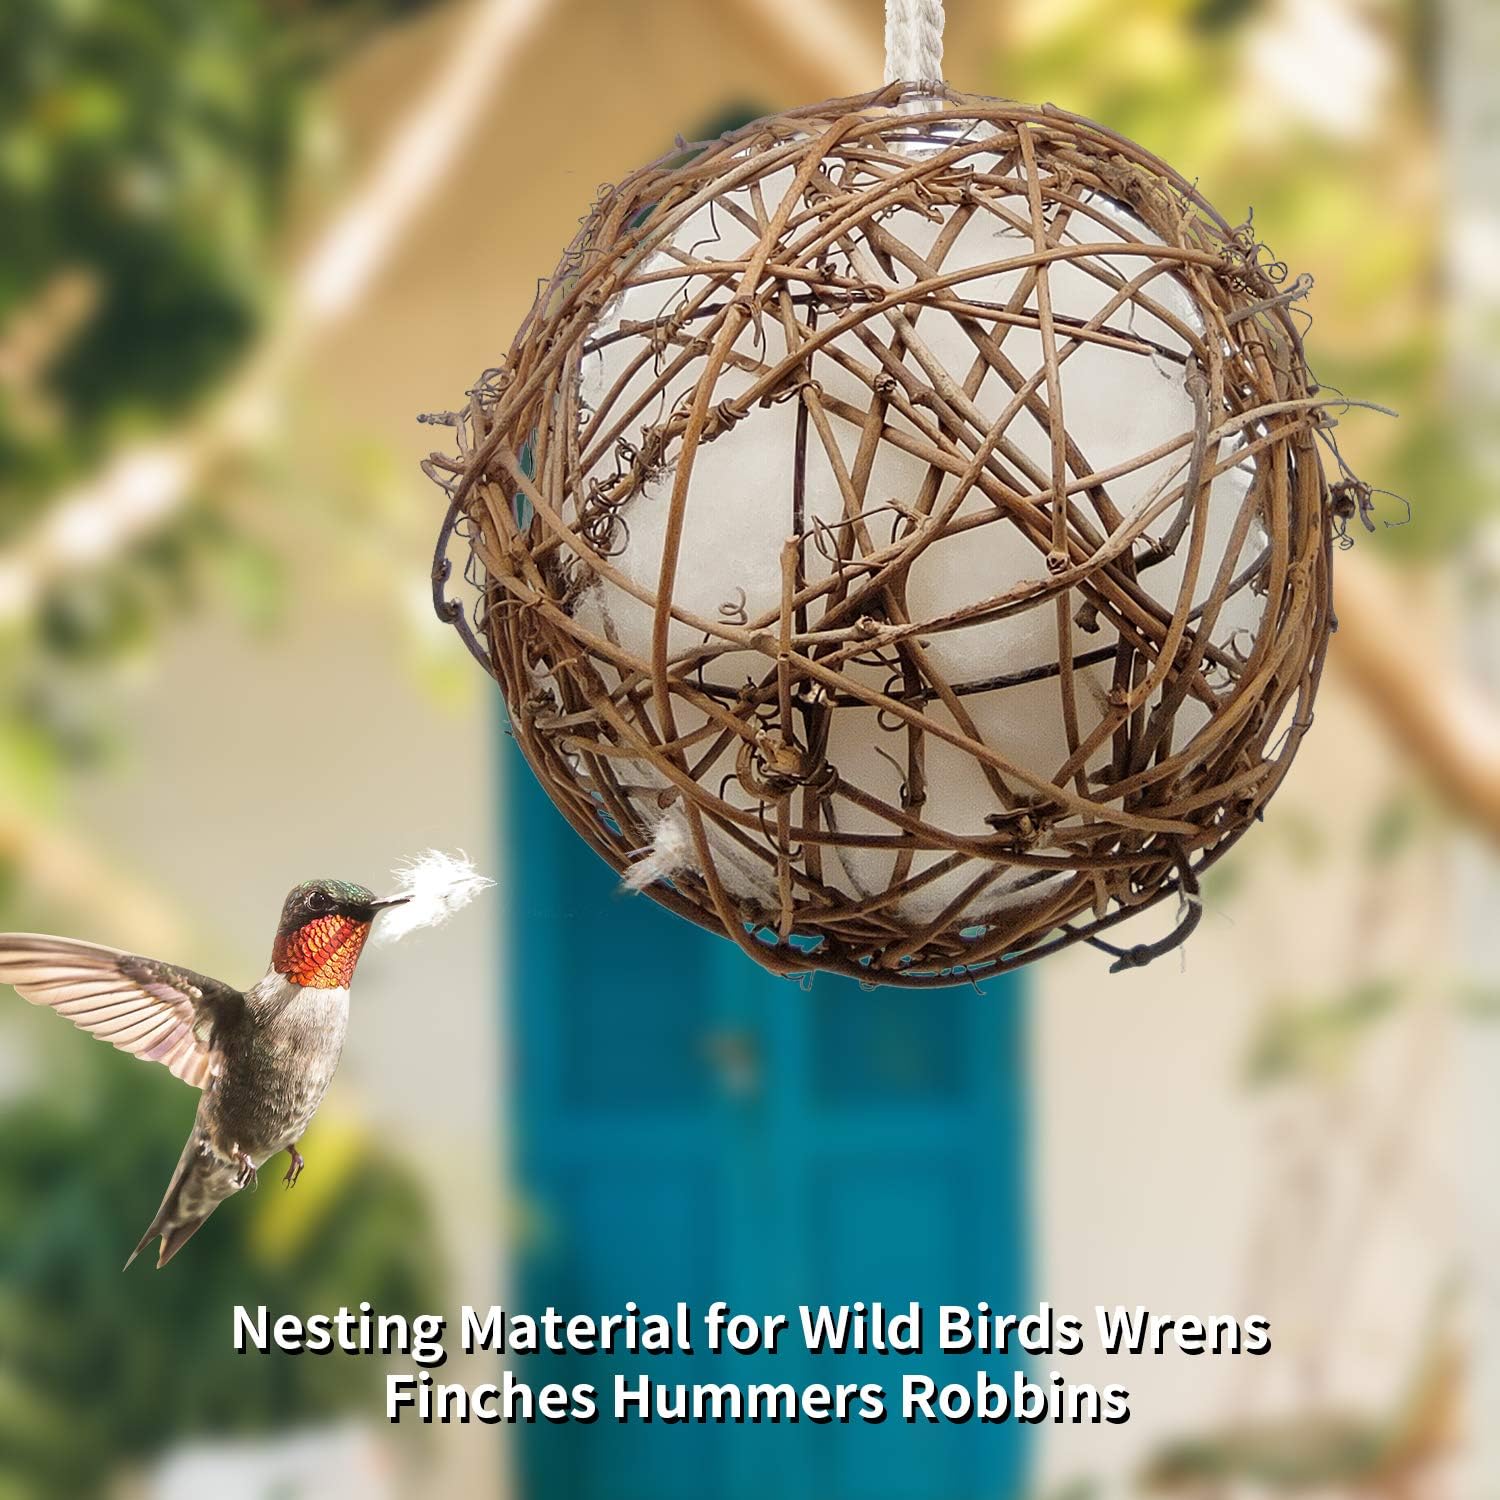 🌱 Spring Selection - Handmade Birdhouse And Birdhouse Materials🌱